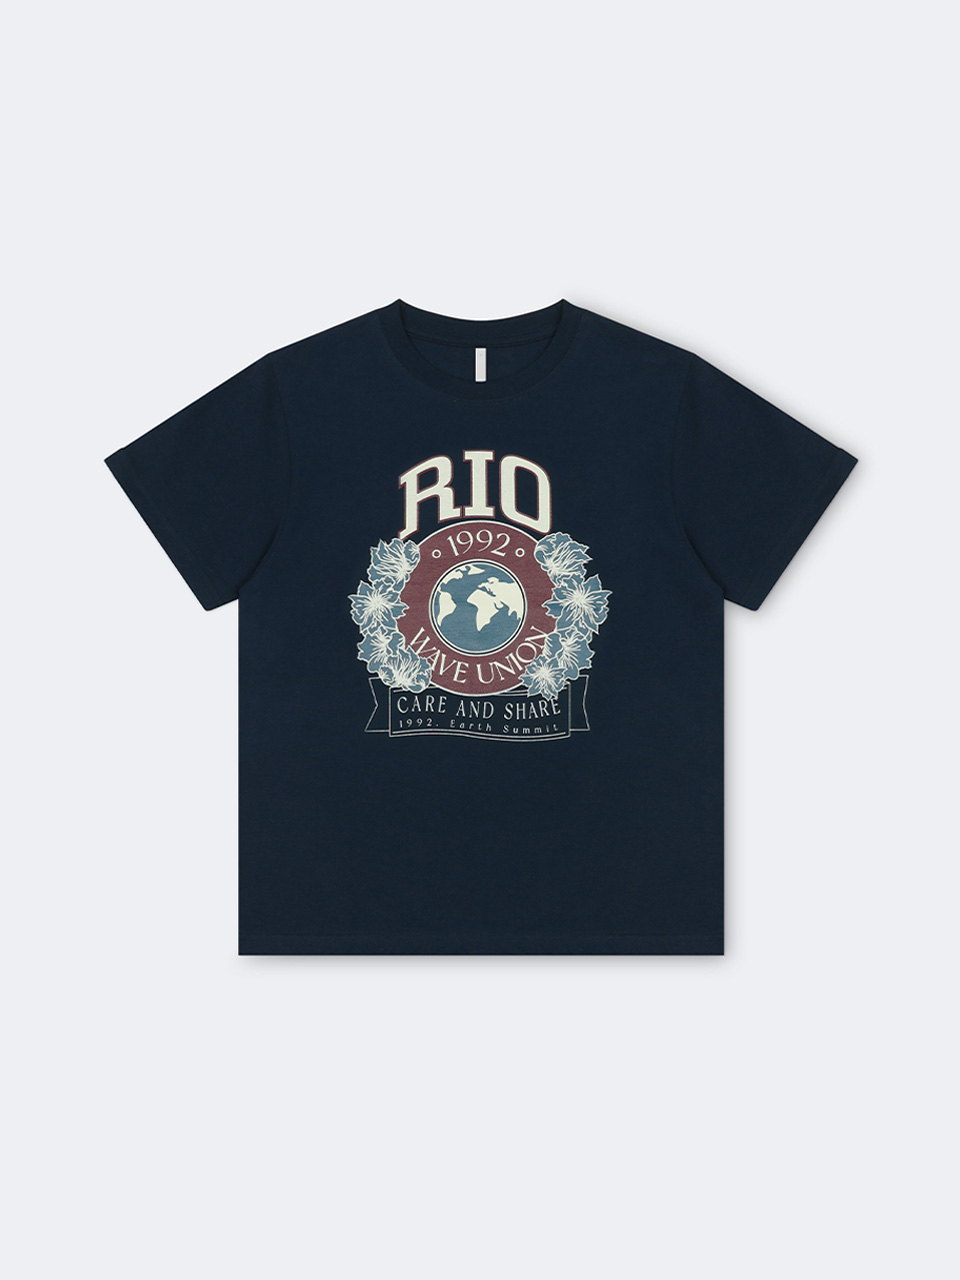 Rio T-shirt navy